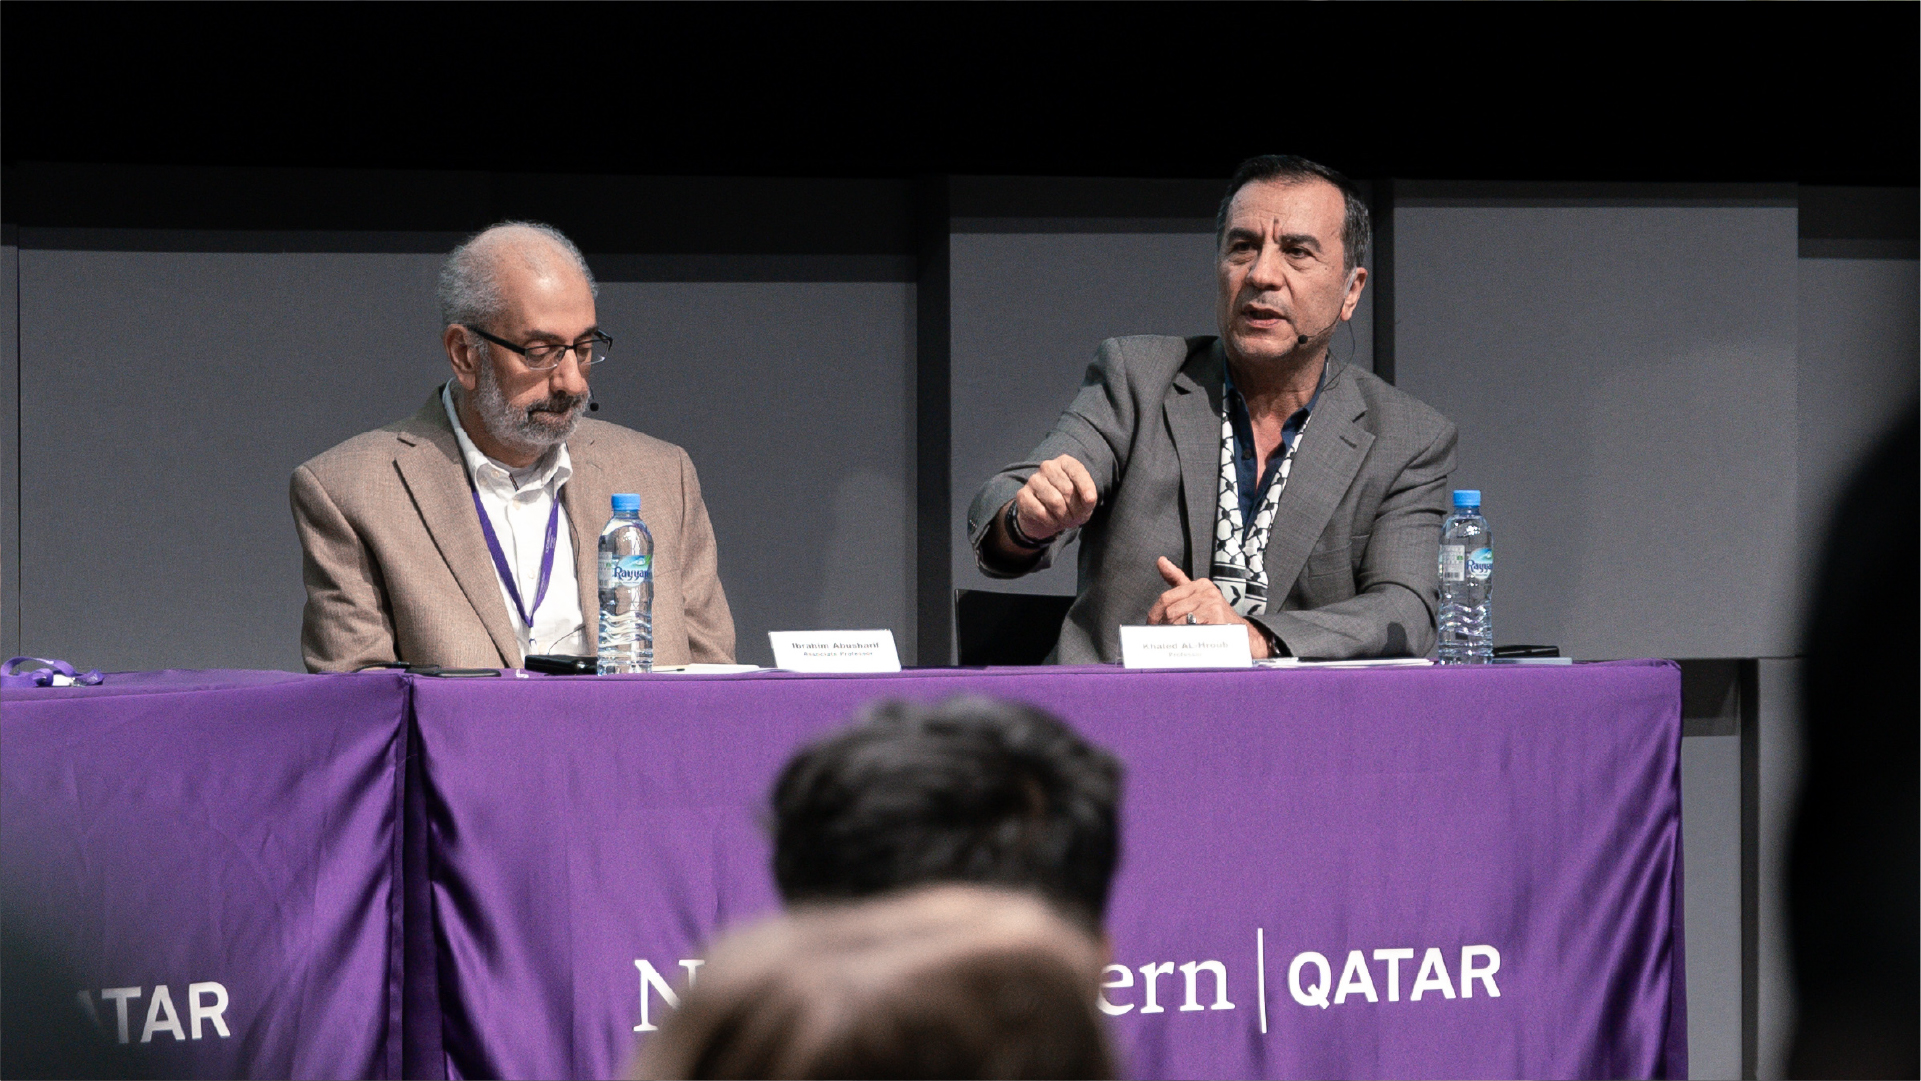 Professor Khaled AL-Hroub intervening during the discussion